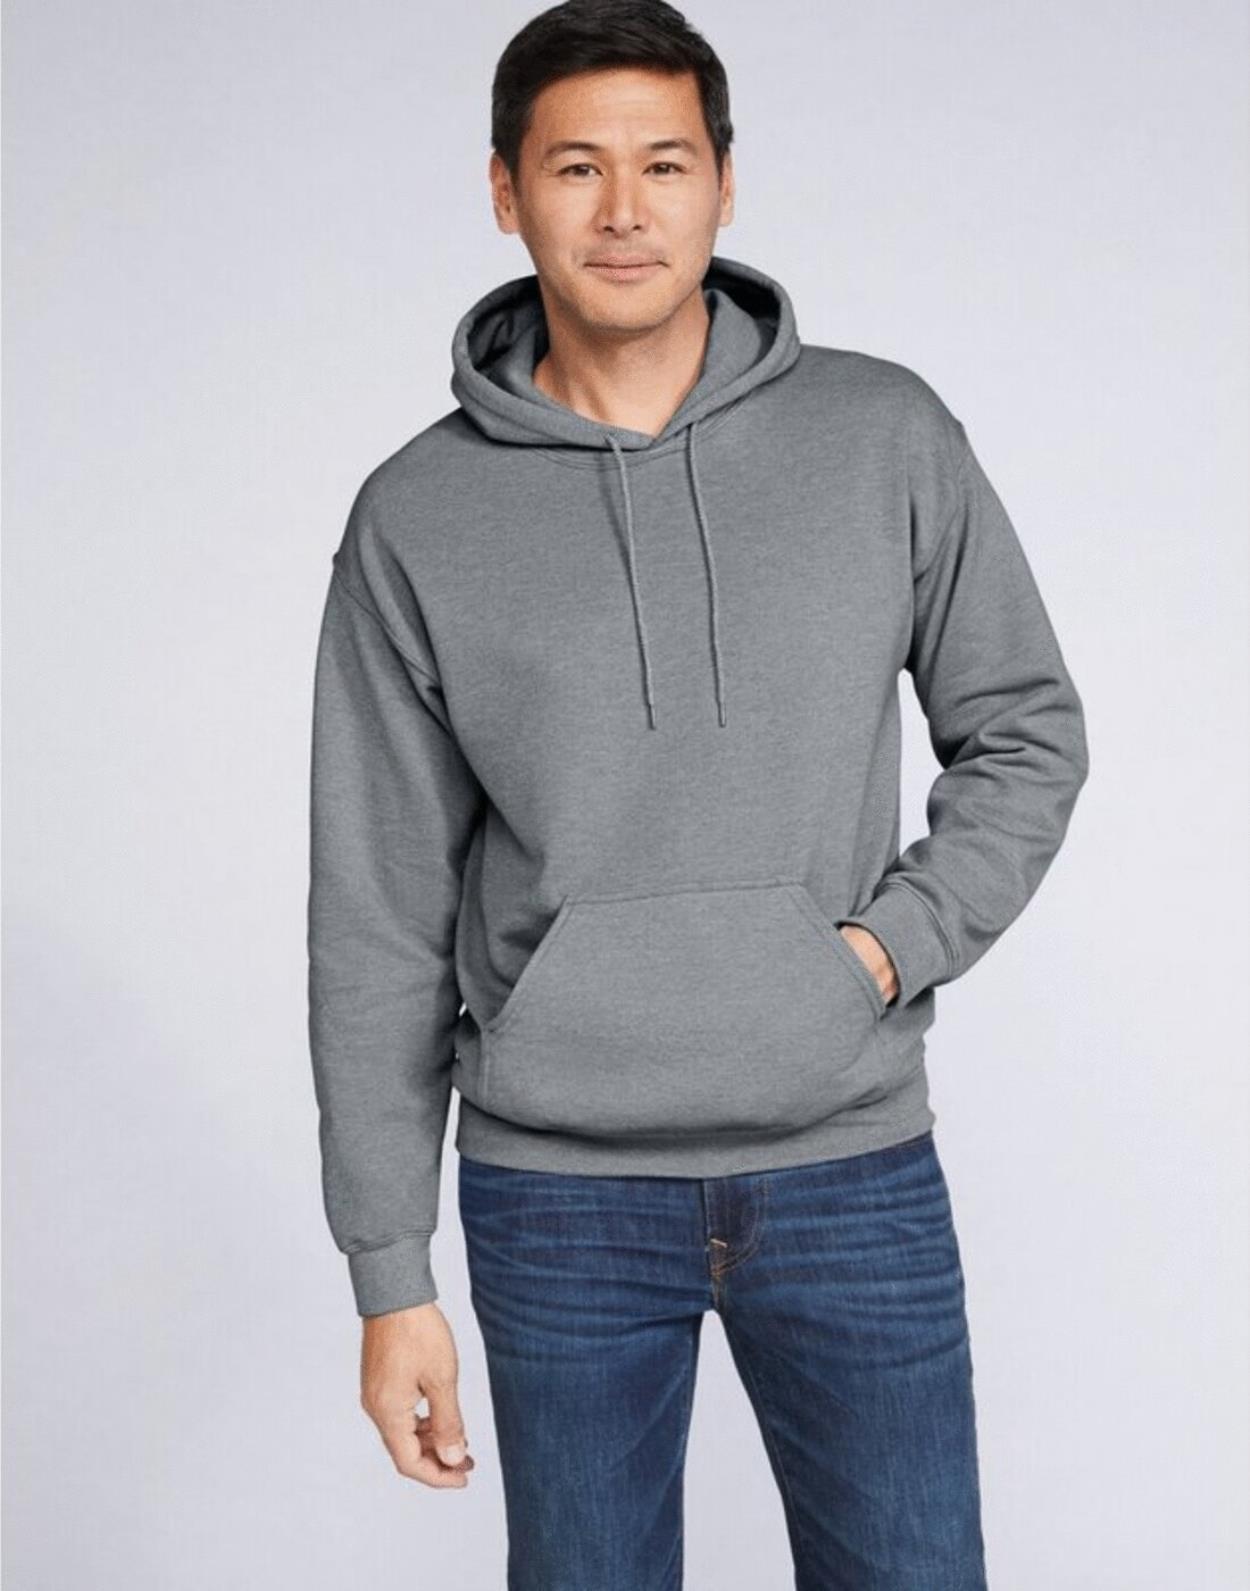 GD57 18500 Heavyweight Hooded Sweatshirt Image 1